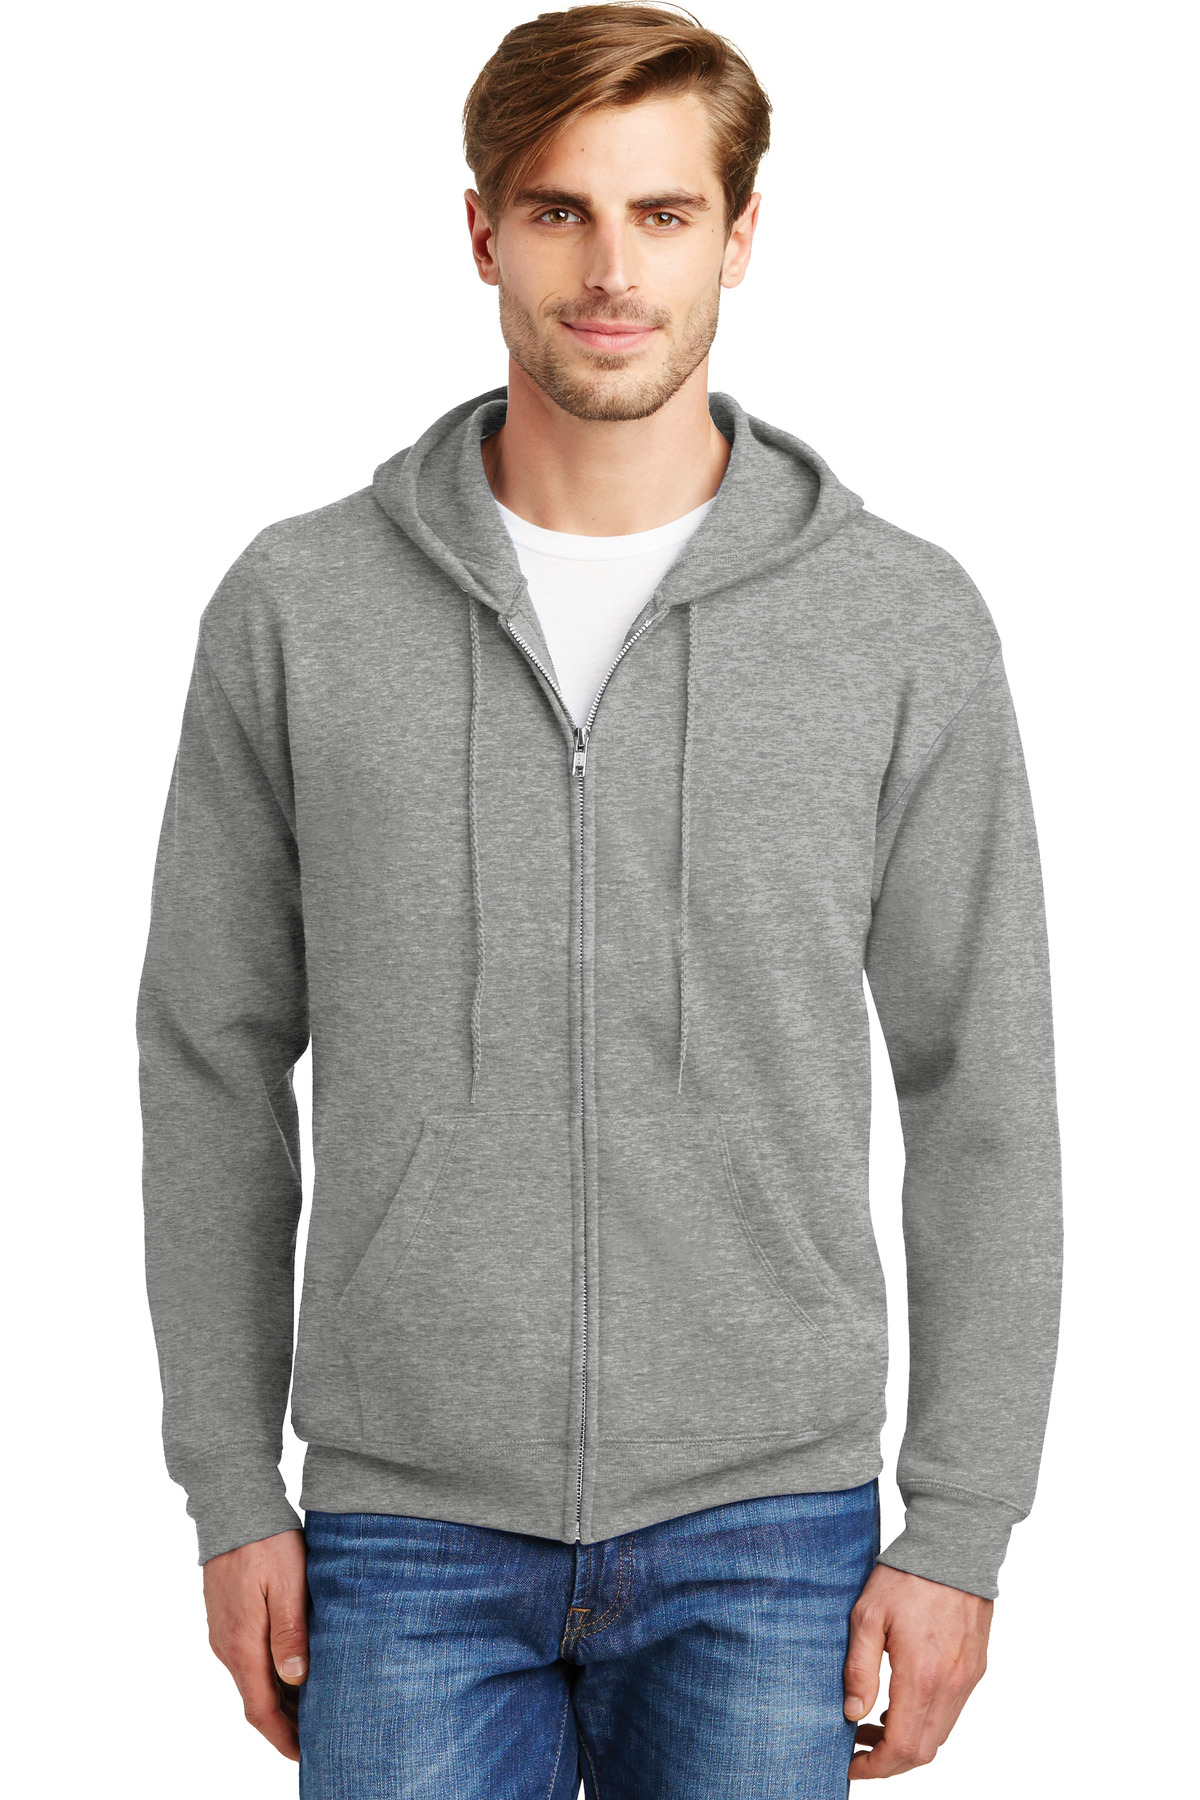 Hanes - EcoSmart Full-Zip Hooded Sweatshirt-